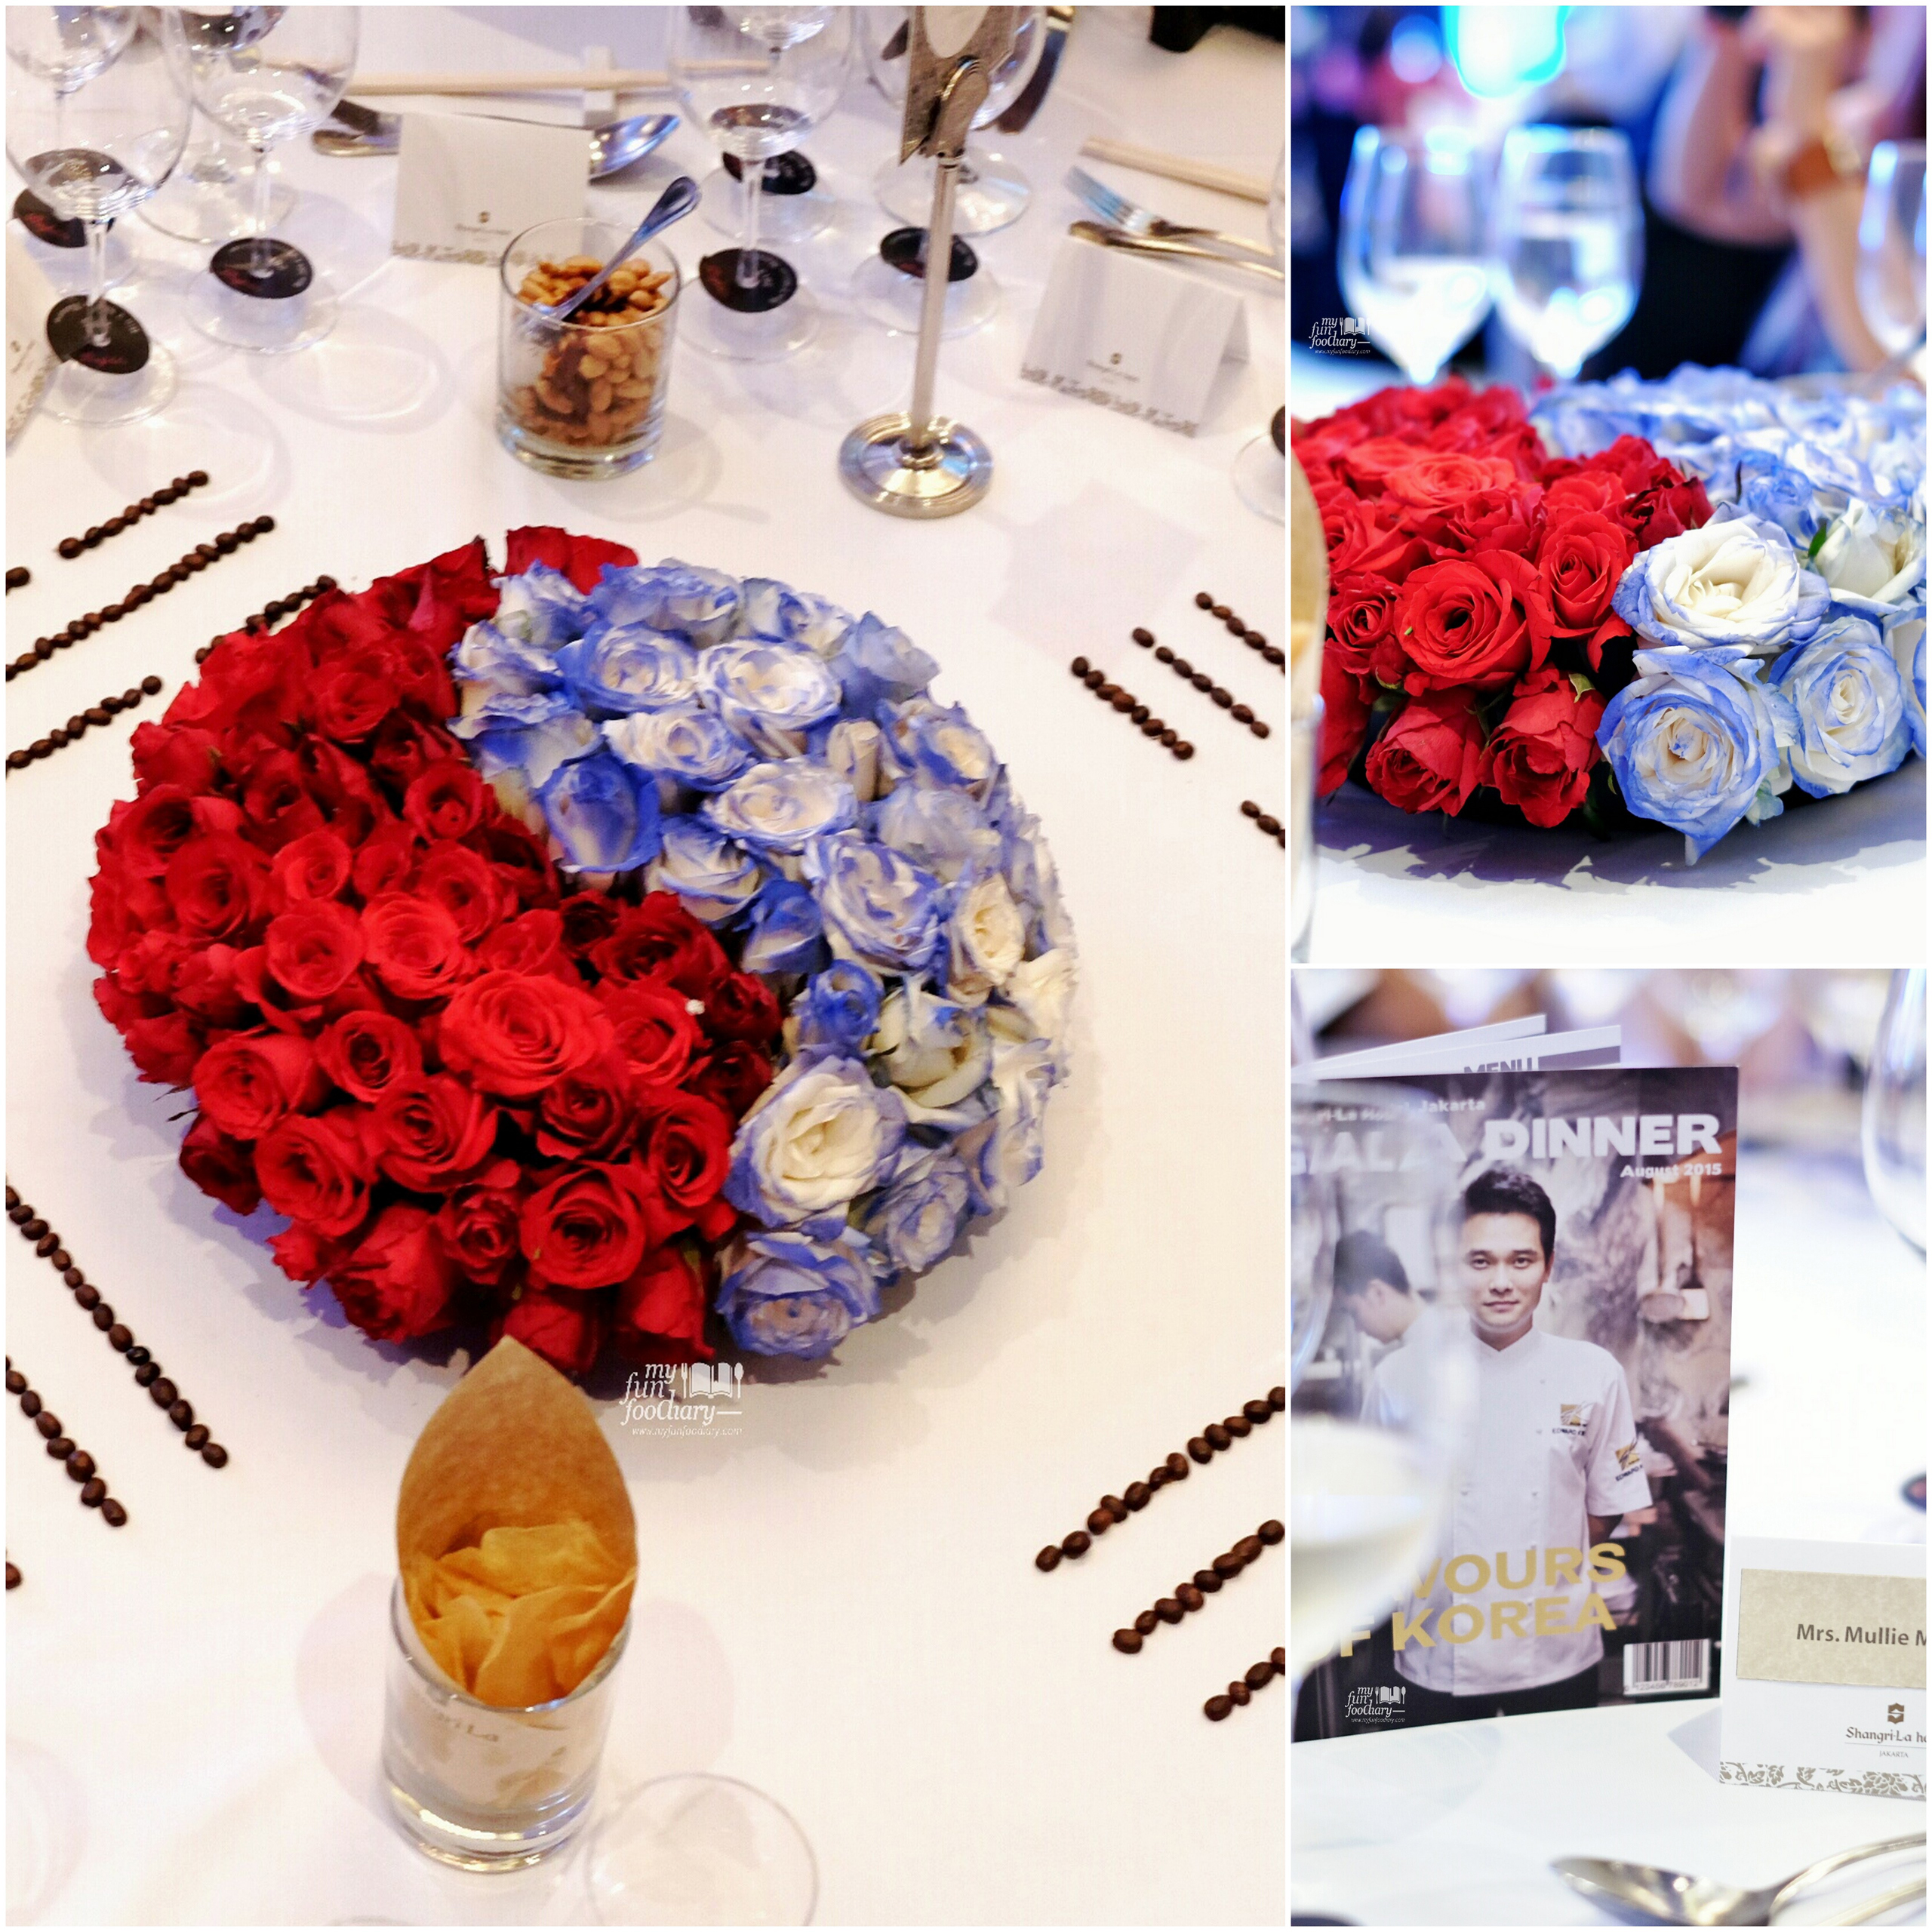 Korean Flag symbolic through fresh flowers on the table at the Gala Dinner by Edward Kwon - Shangri-La Jakarta by Myfunfoodiary